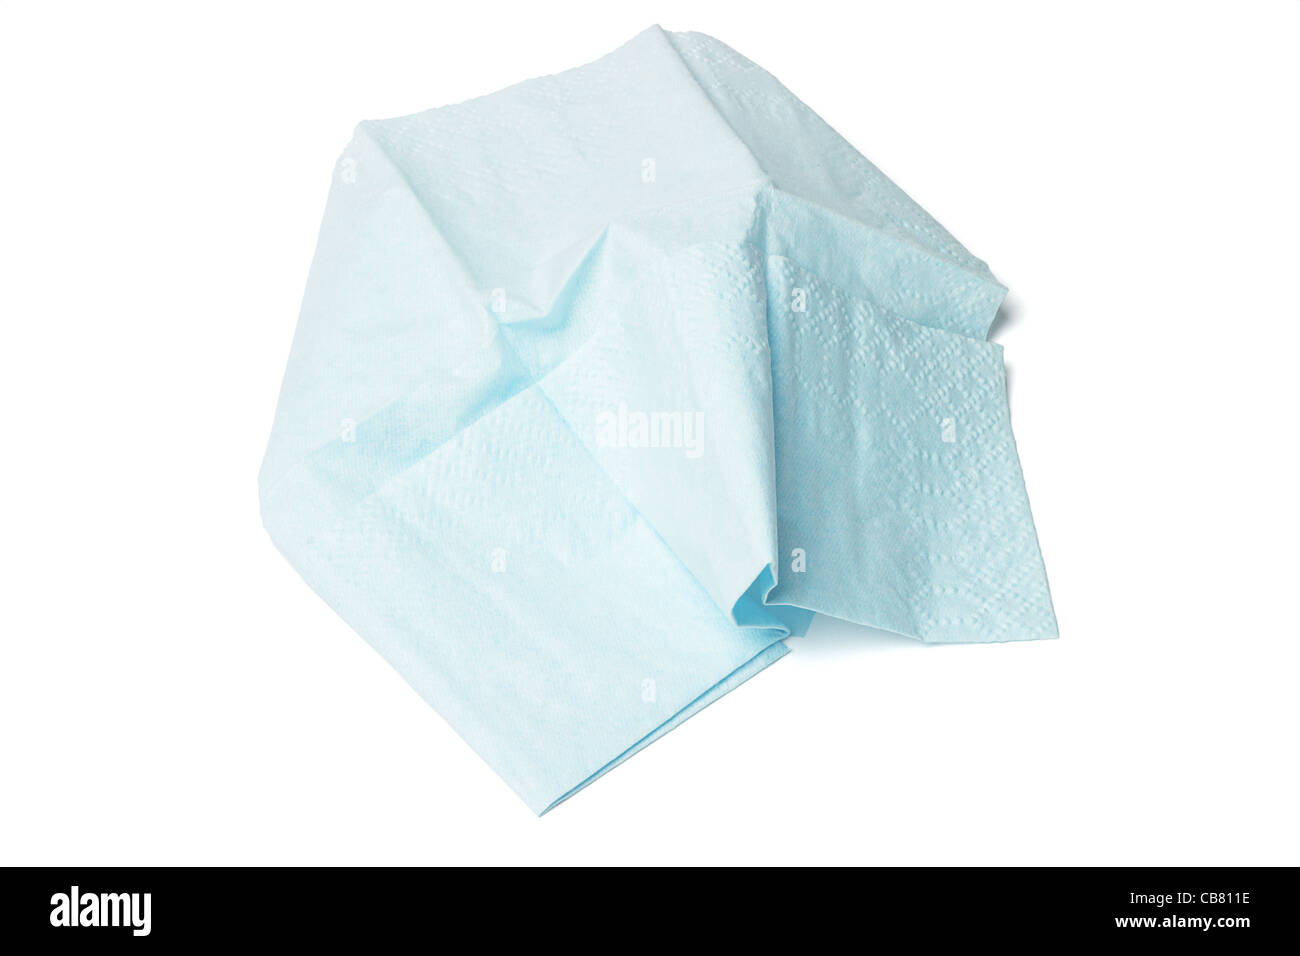 Blue tissue paper lying on white background Stock Photo